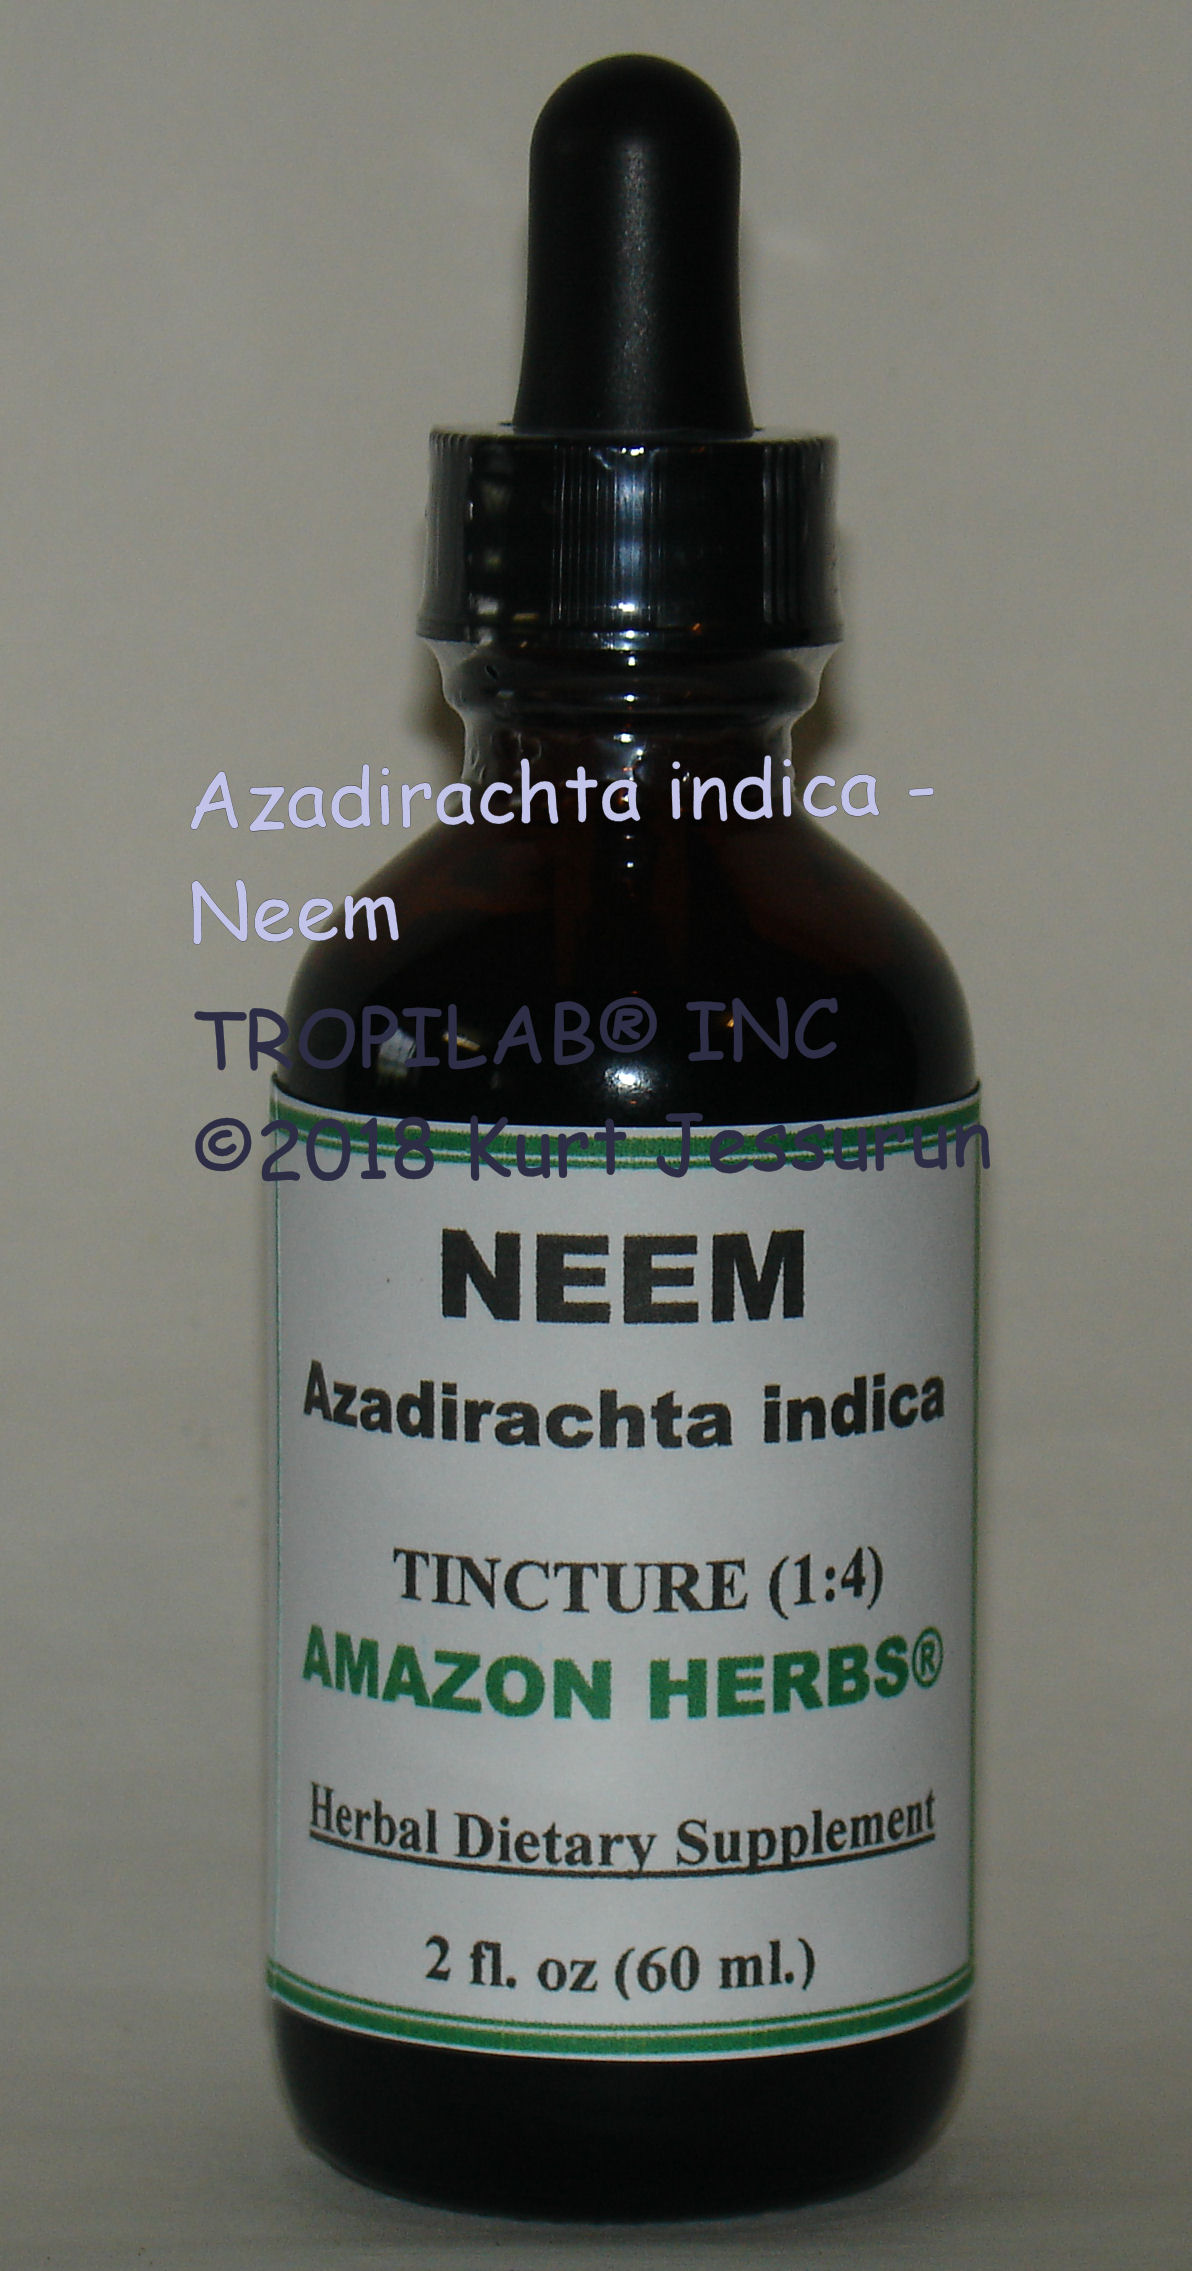 Azadirachta indica - Neem tincture